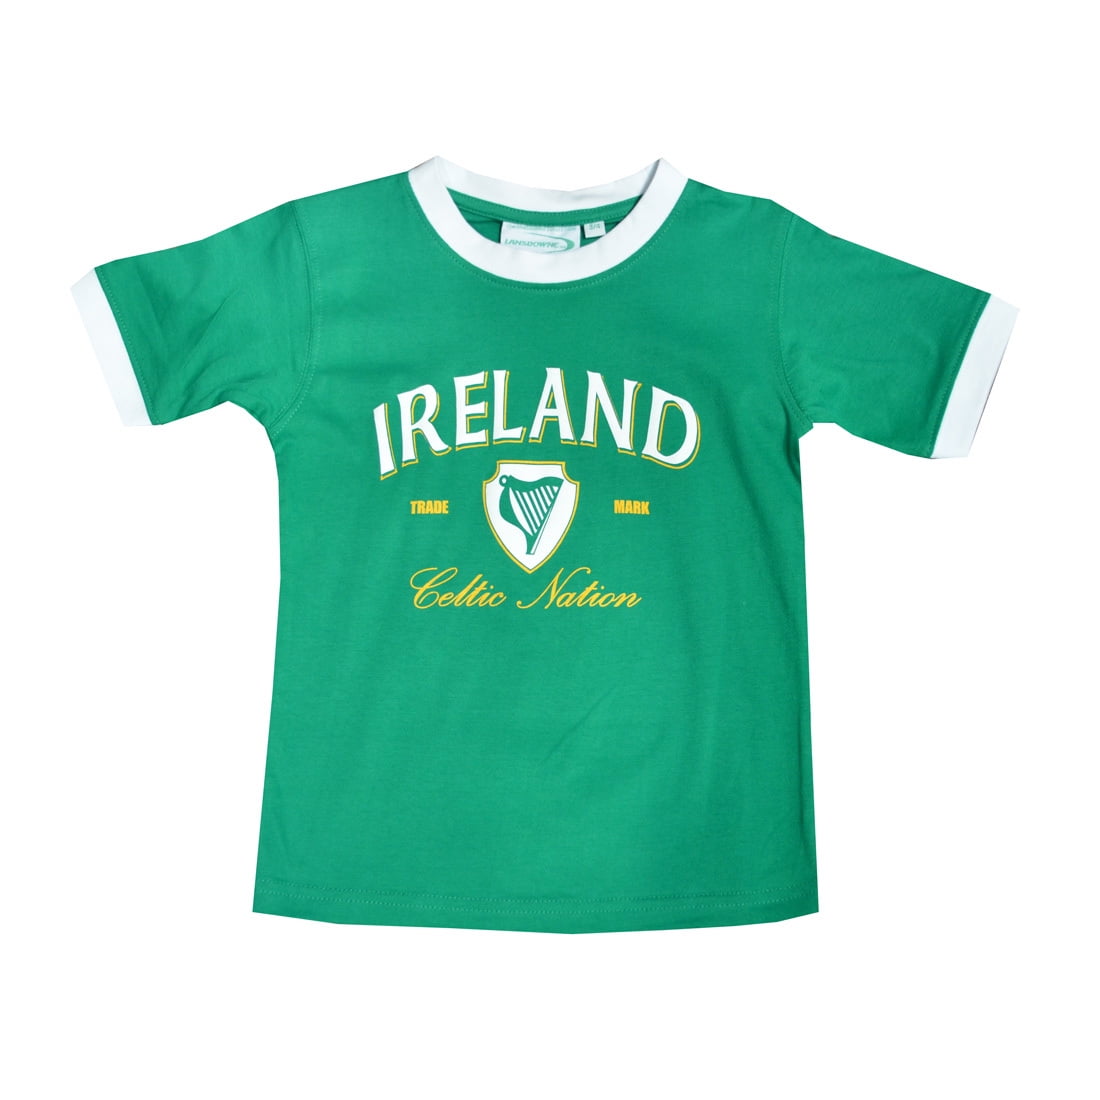 Emerald Green T Shirt on Sale, 59% OFF | espirituviajero.com